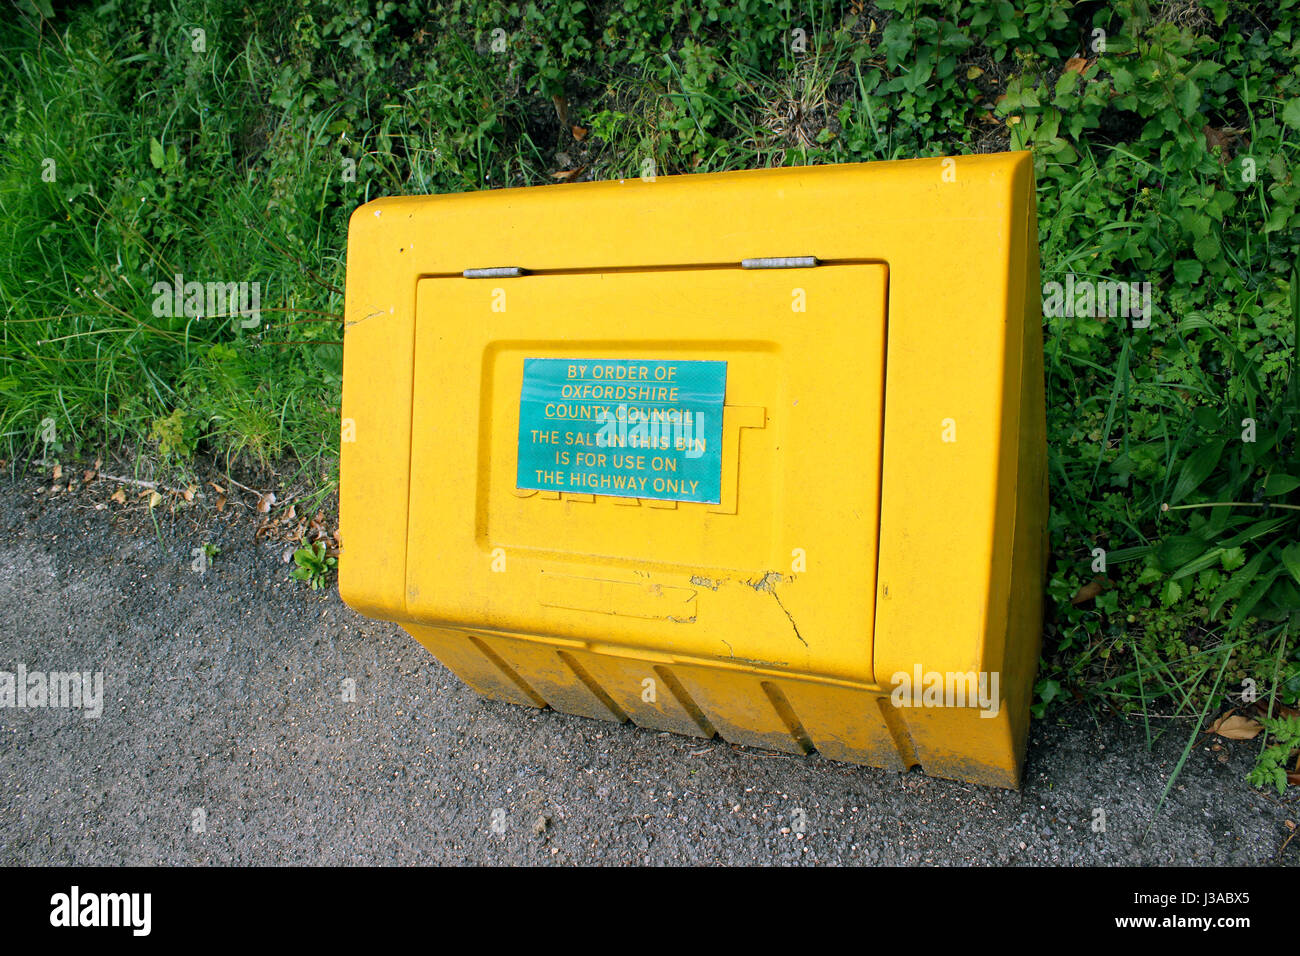 Oxfordshire County Council rural area salt bin Stock Photo